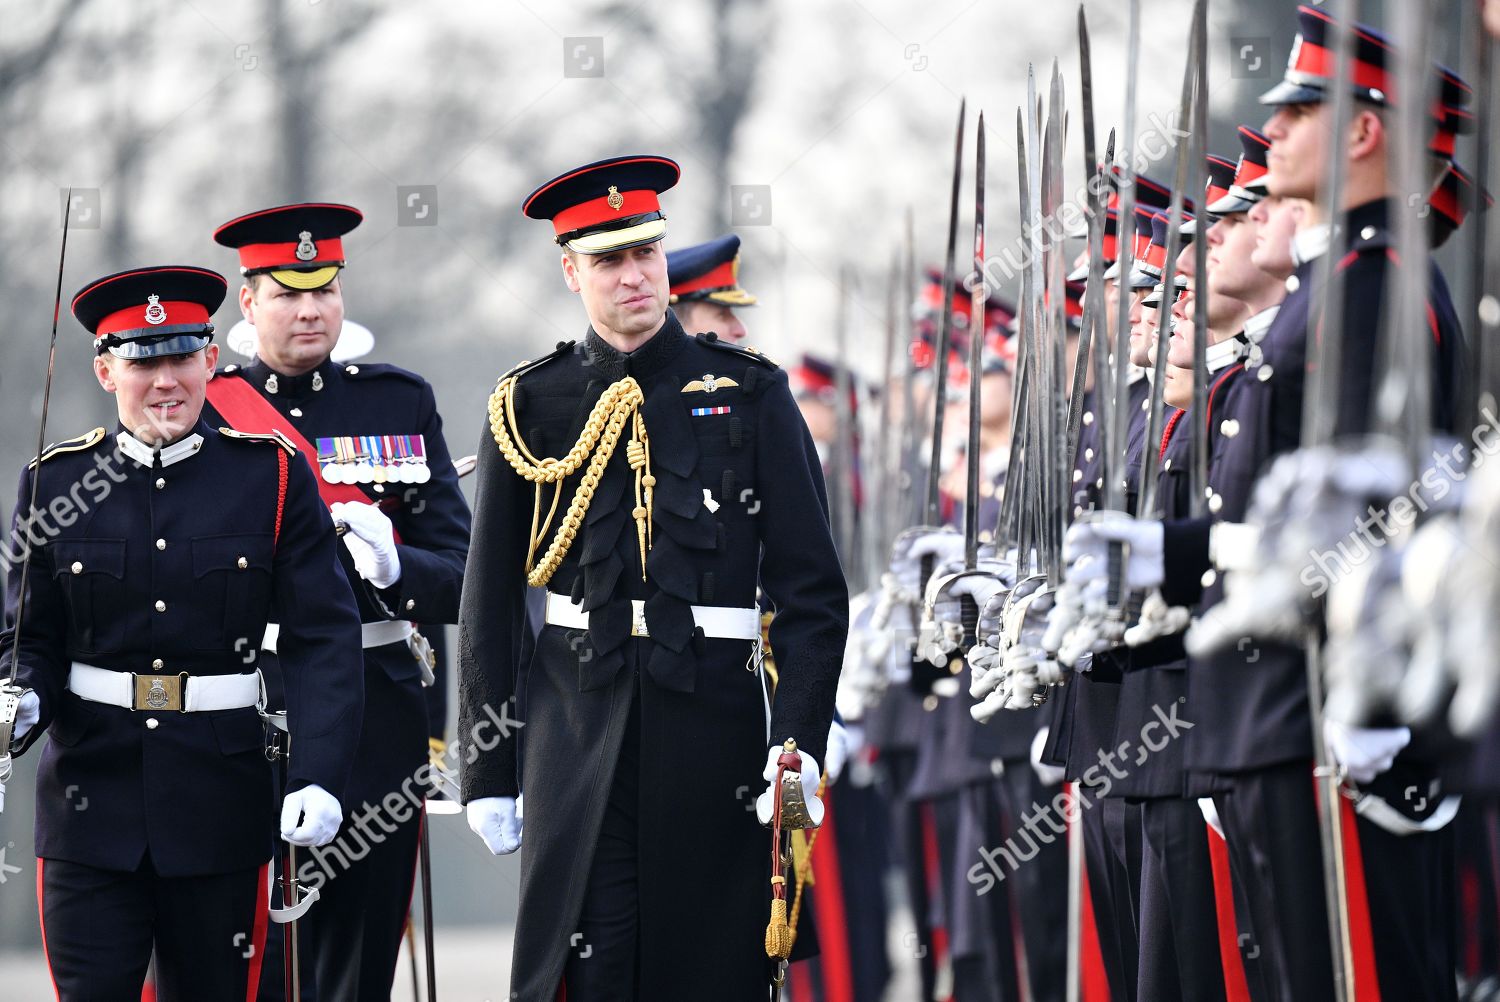 sovereigns-parade-at-the-royal-military-academy-sandhurst-berkshire-uk-shutterstock-editorial-10033849z.jpg